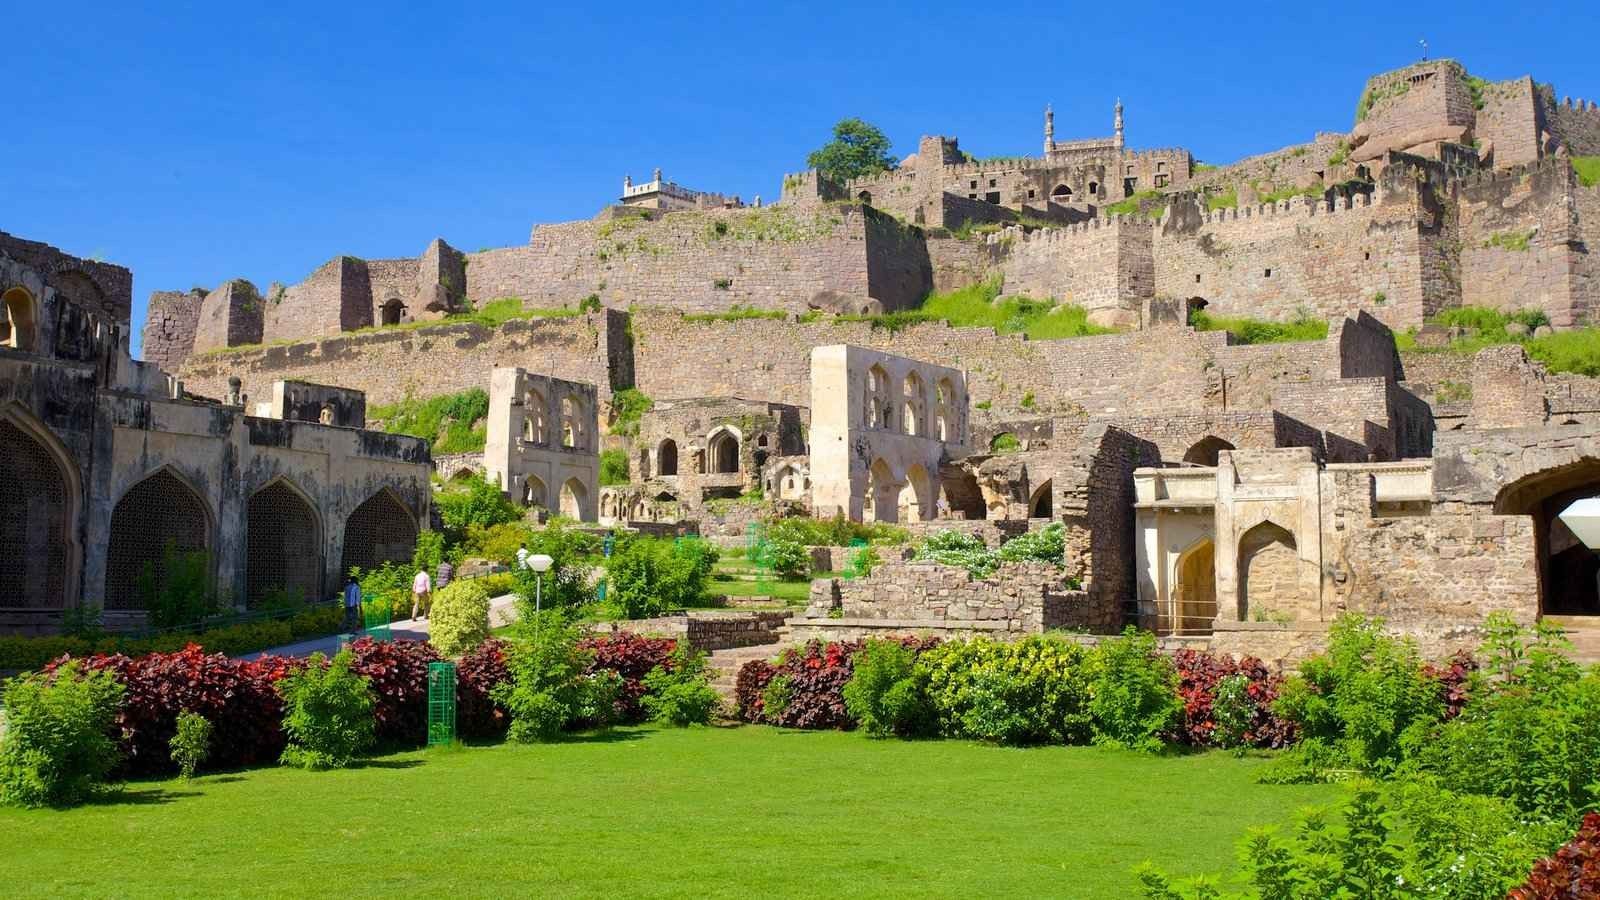 1581227162 868 السياحة في حيدر أباد الهند .. أجمل 8 اماكن سياحية - Tourism in Hyderabad India ... the most beautiful 8 wonderful tourist places